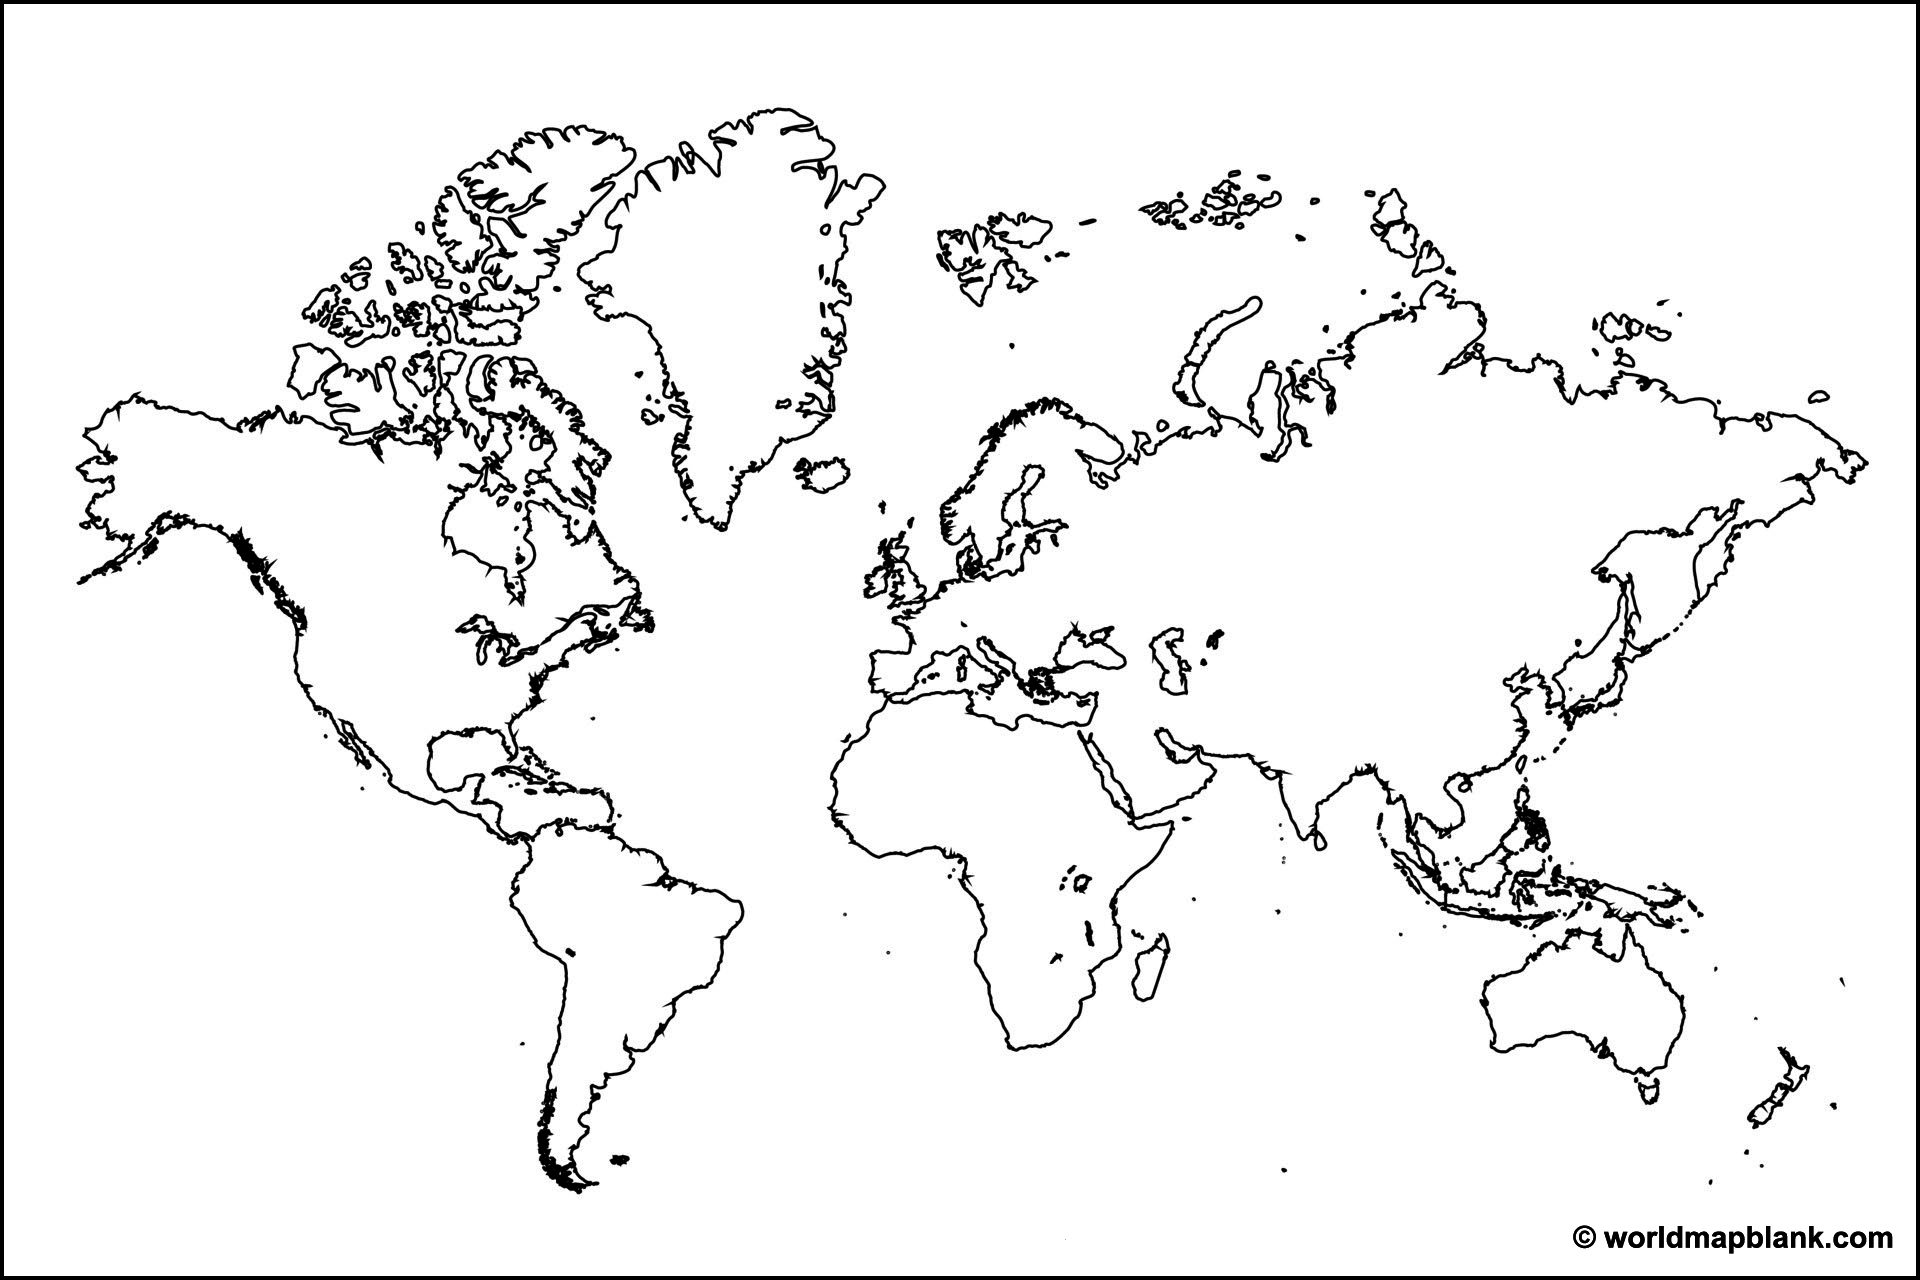 ​Cartina muta del mondo